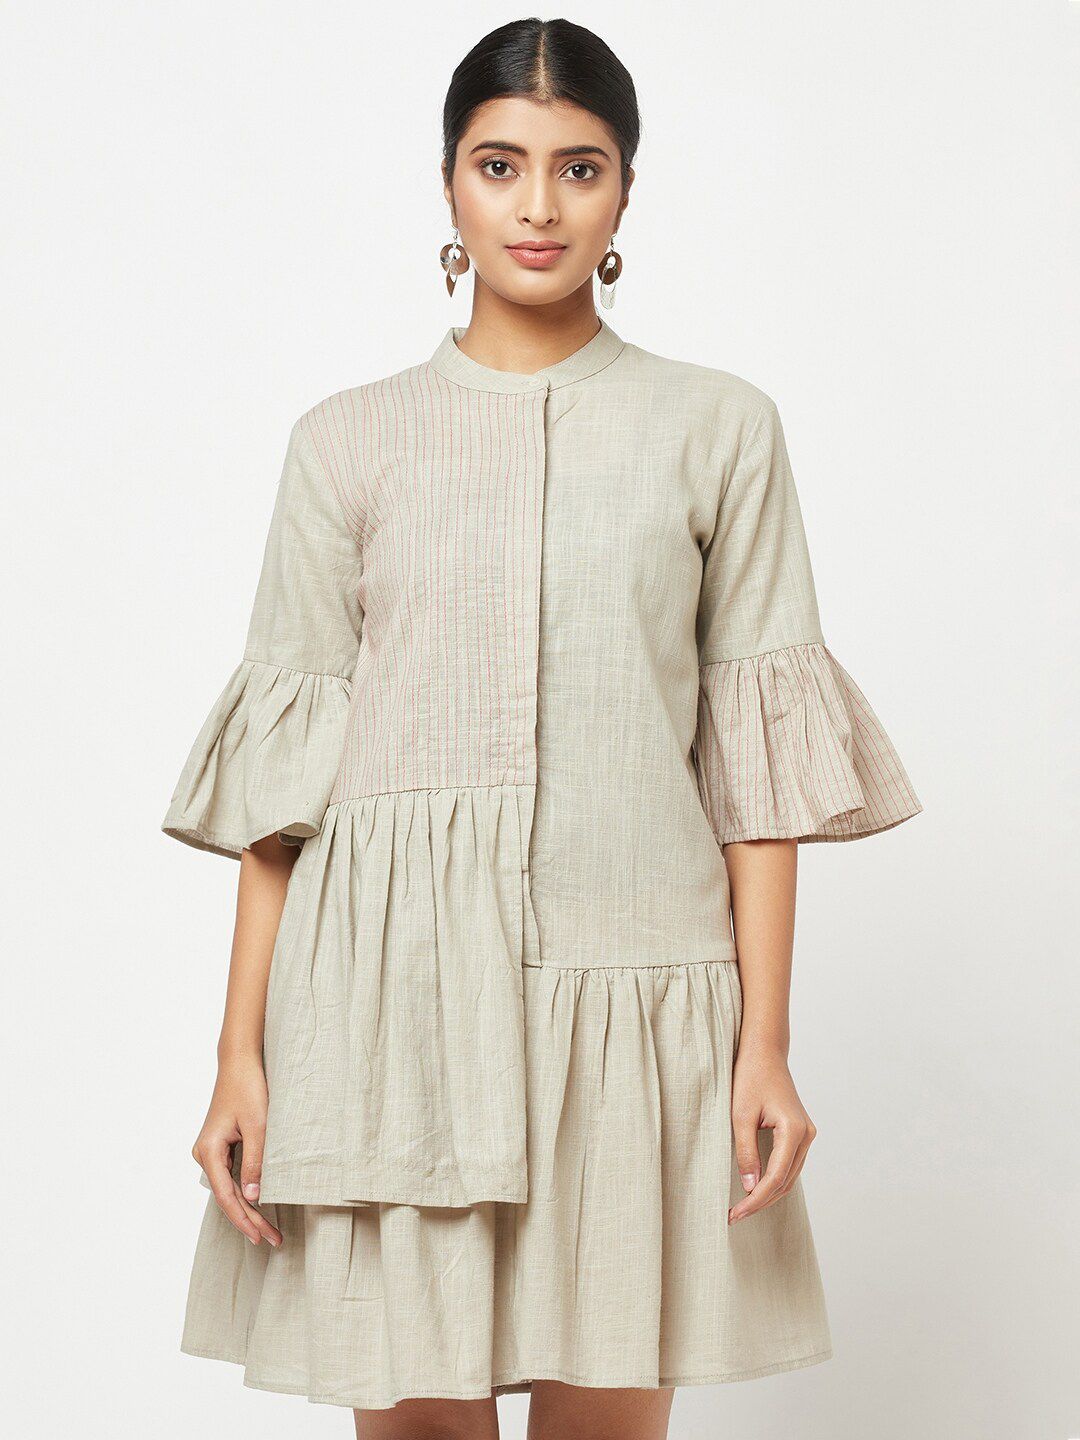 Fabindia Women Grey Drop-Waist Cotton Dress Price in India